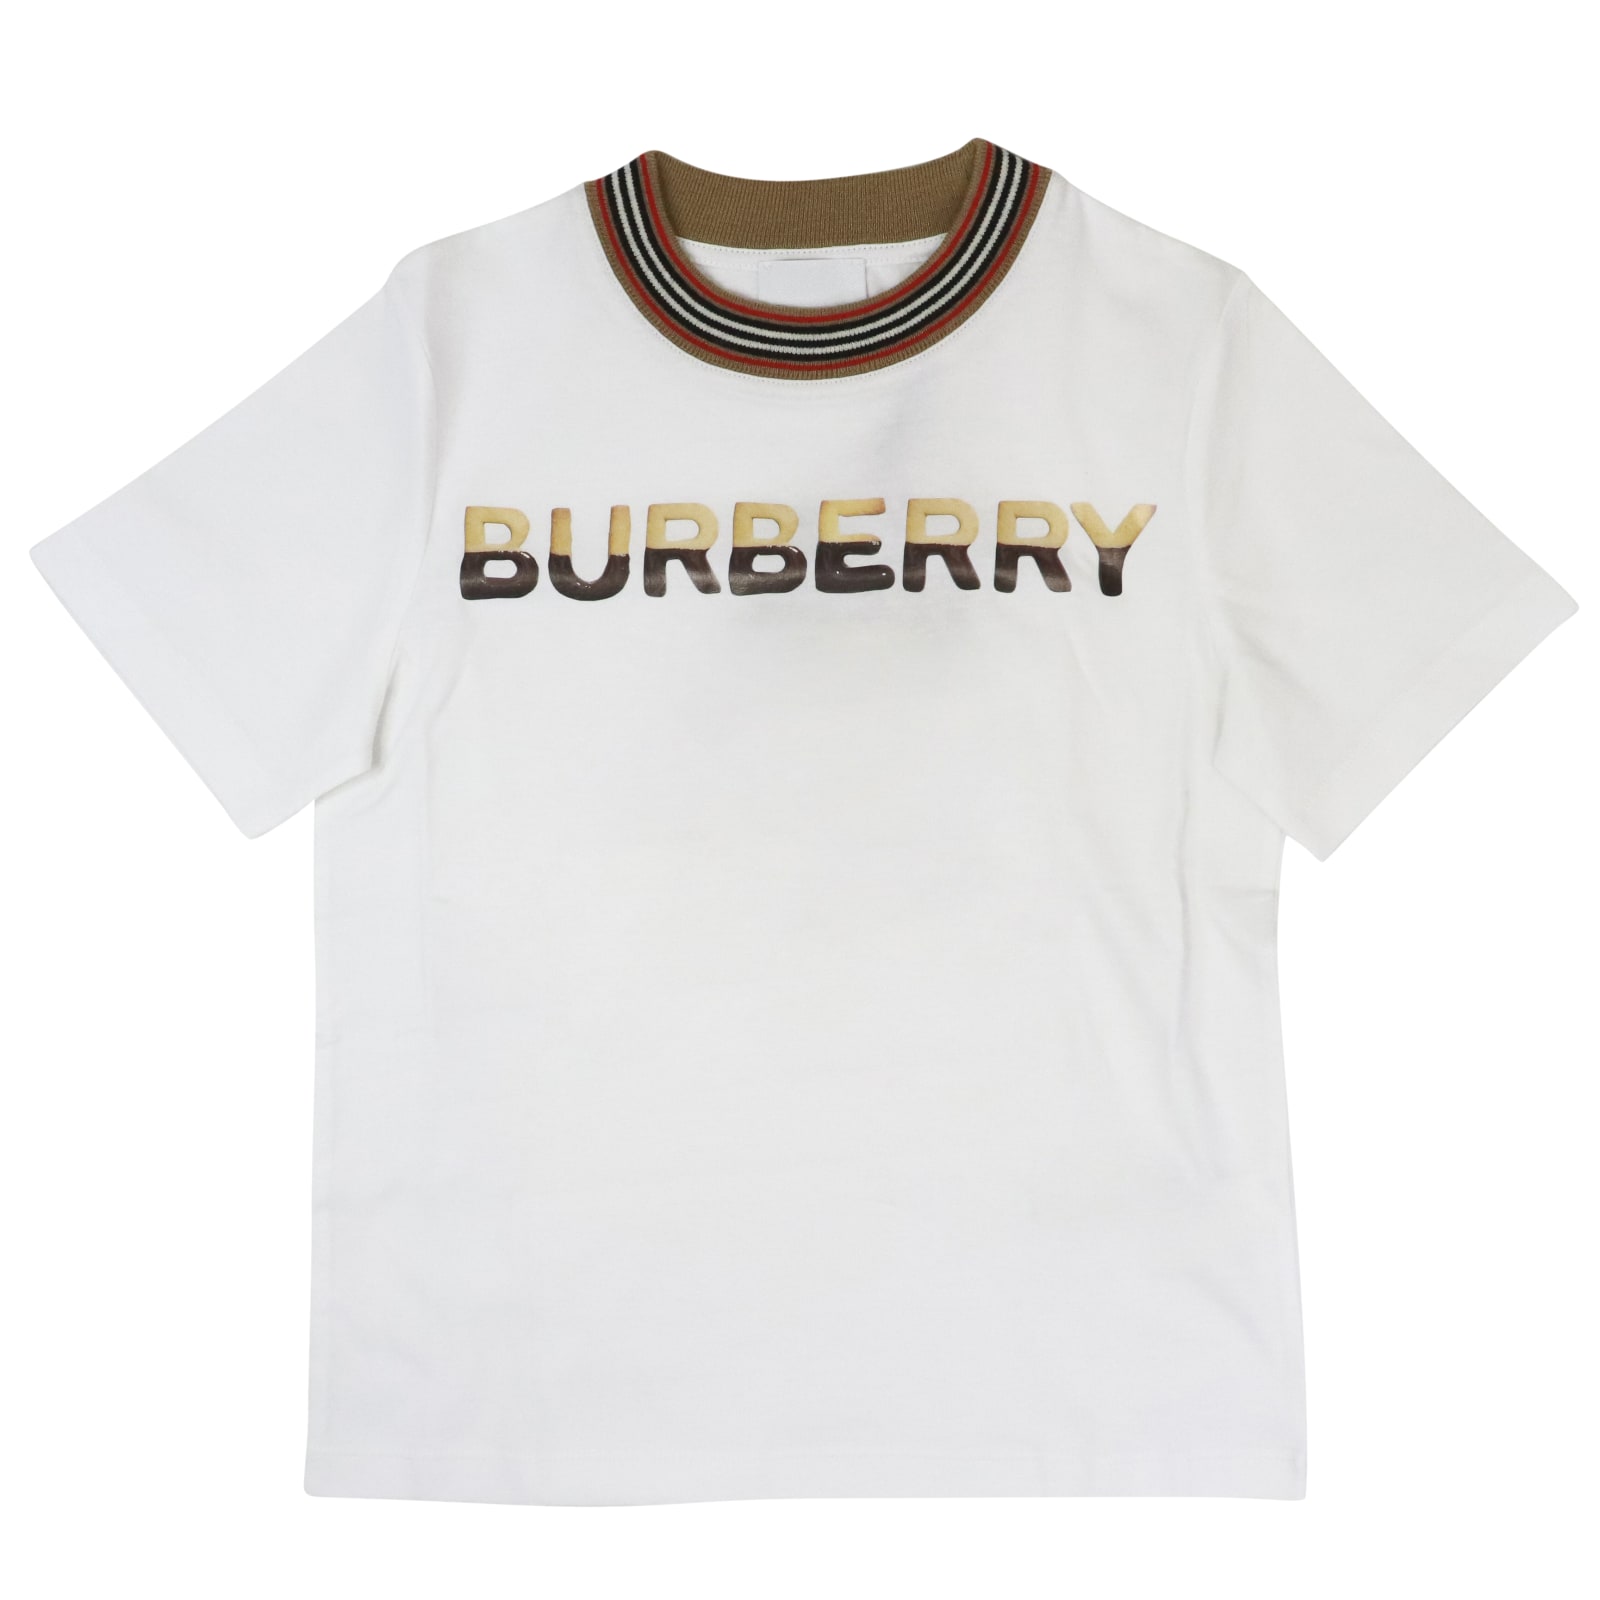 Burberry Shortbread T-shirt